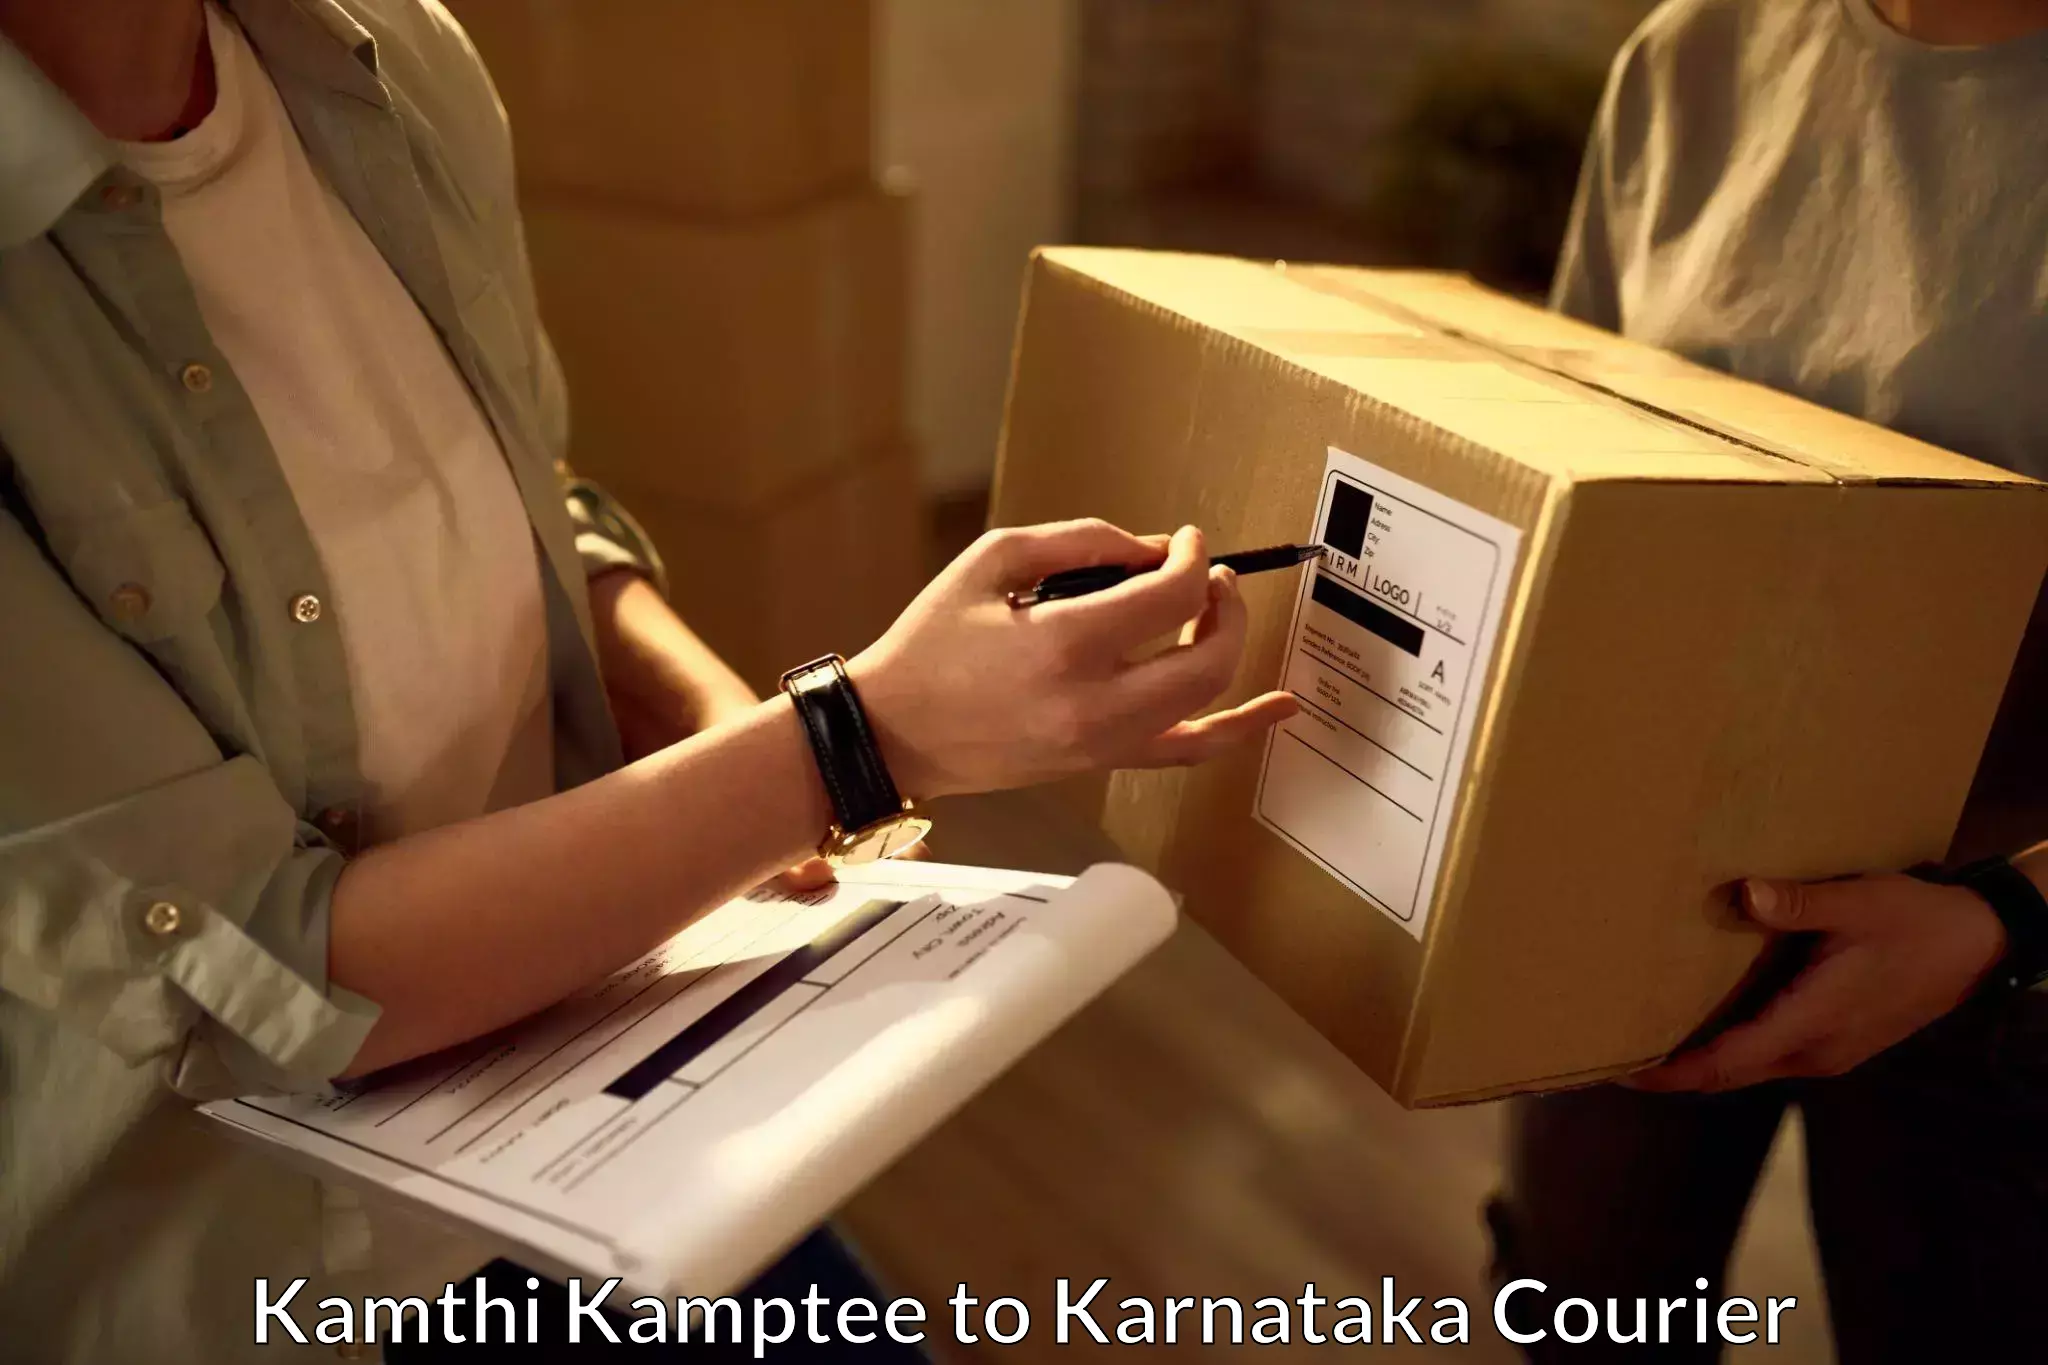 Global logistics network Kamthi Kamptee to Karnataka